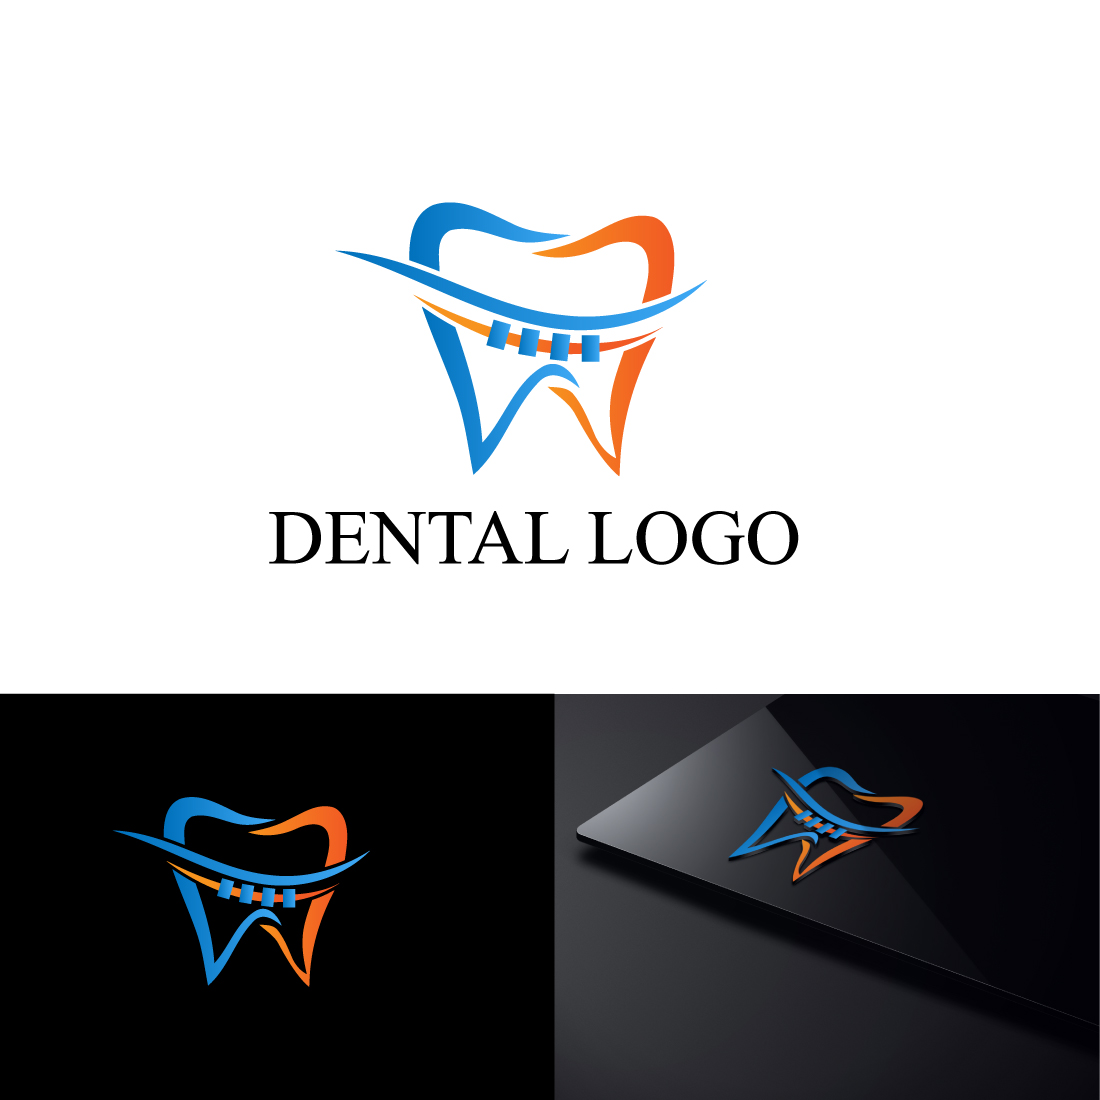 Dental logo, dental logo, dental, modern dental logo, dental icon, dental company logo, dental business logo cover image.